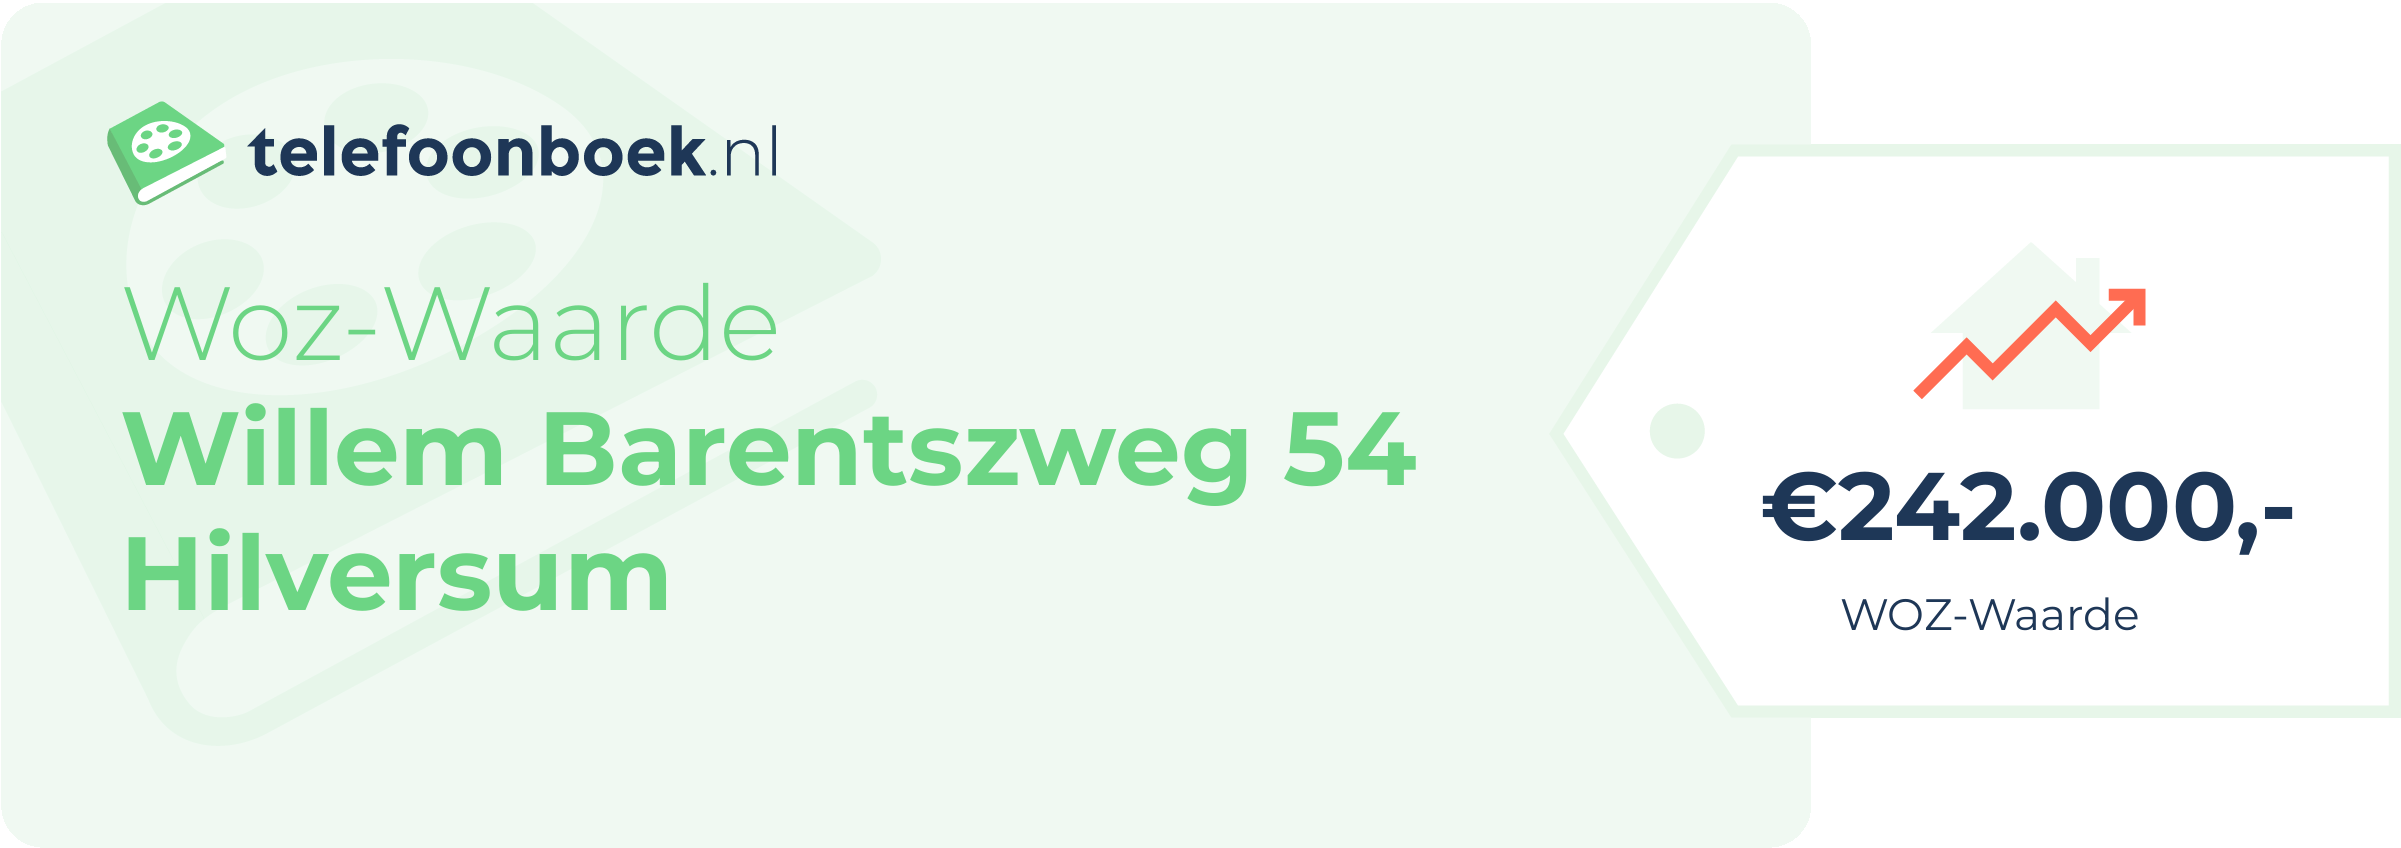 WOZ-waarde Willem Barentszweg 54 Hilversum